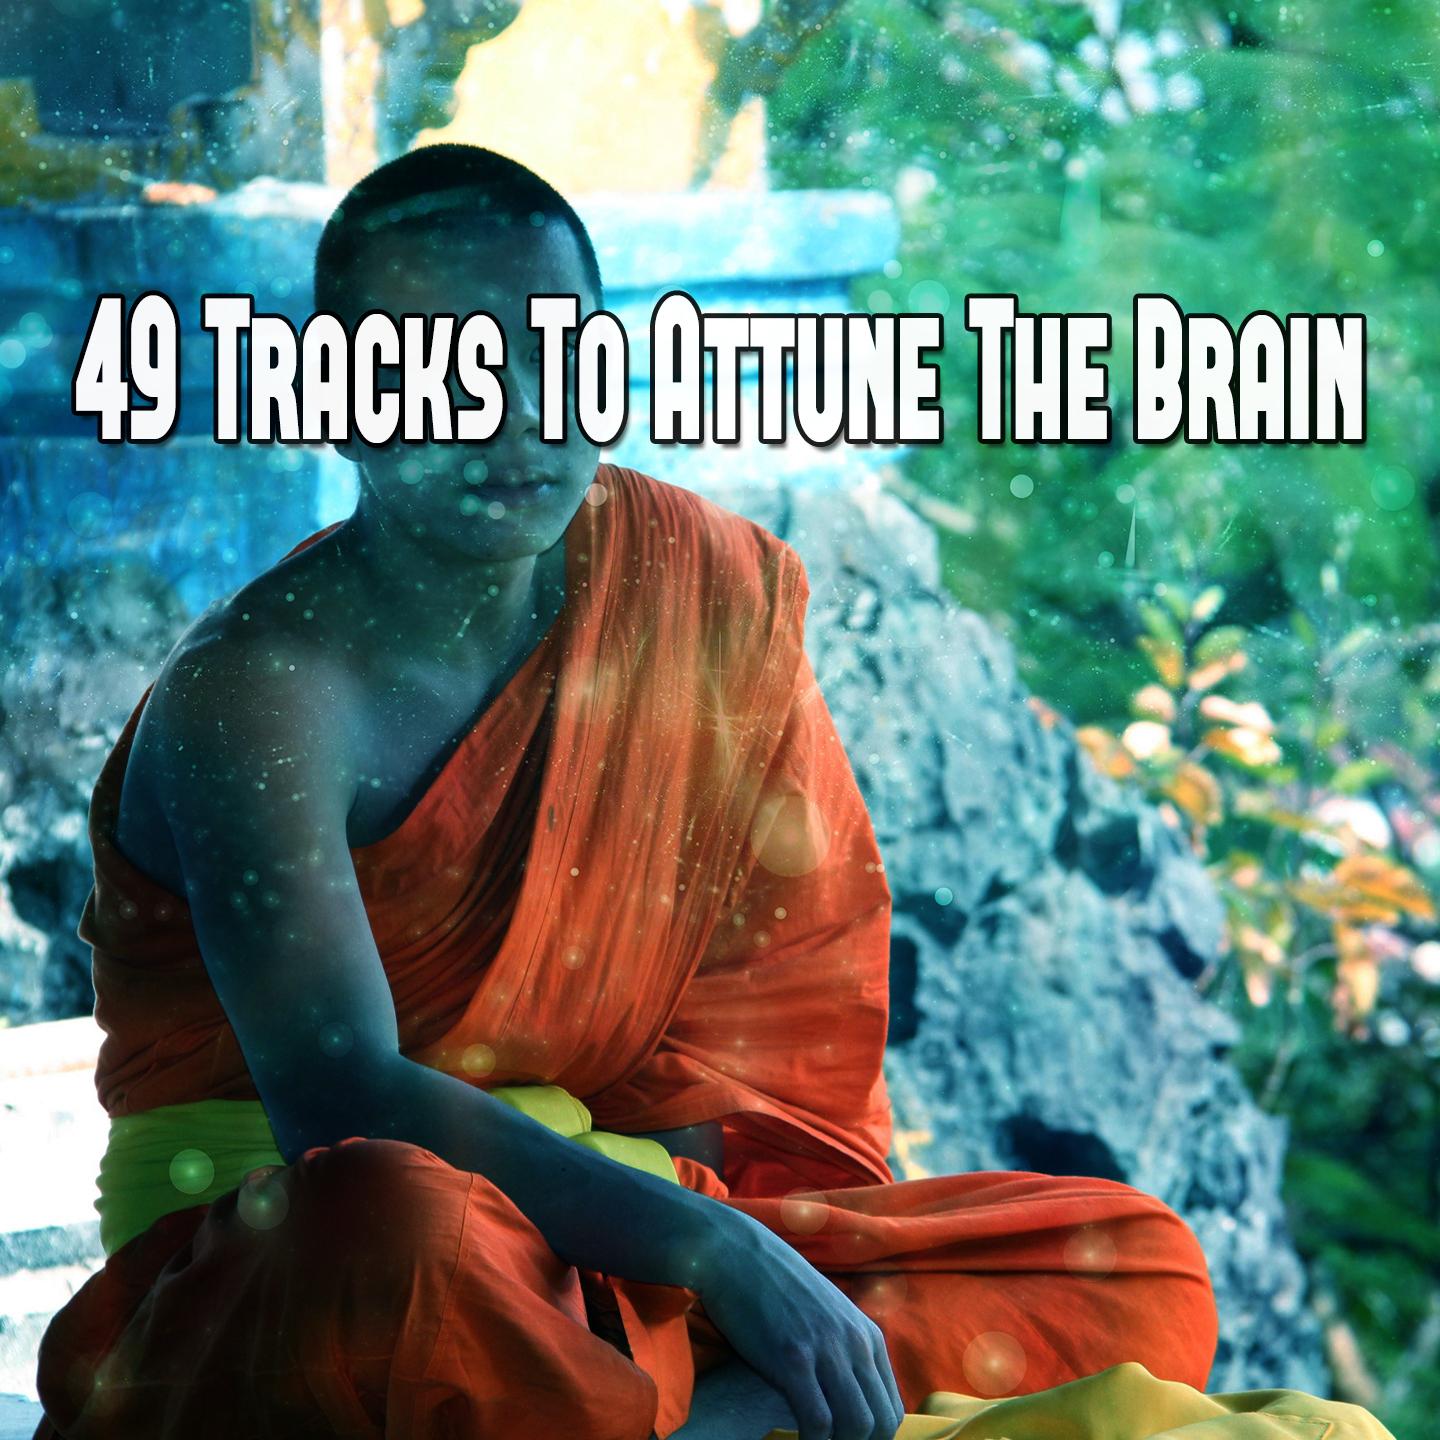 49 Tracks To Attune The Brain